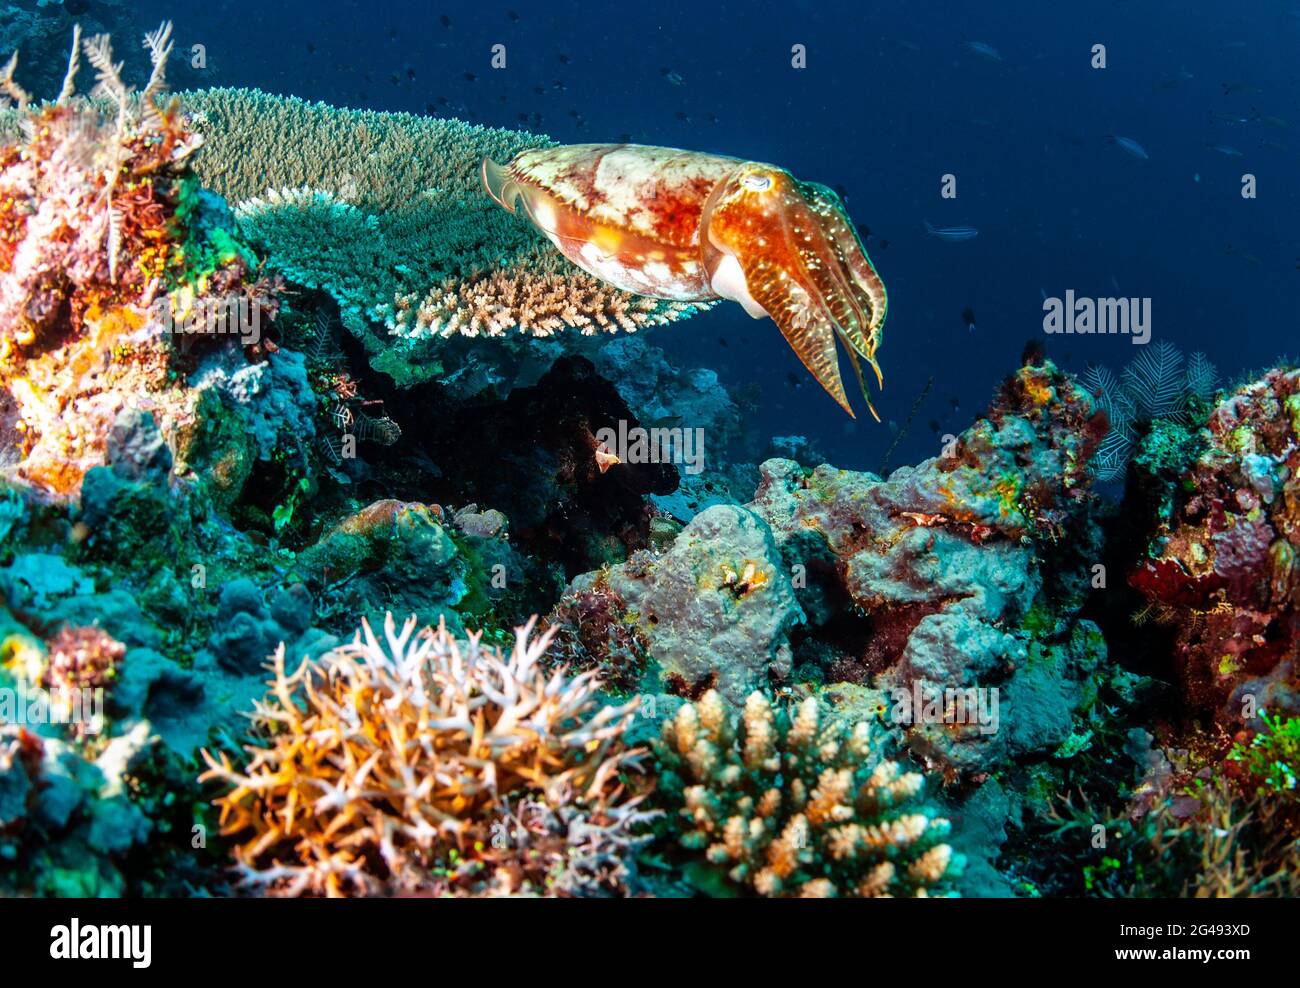 Broadclub-Tintenfisch (Sepia latimanus) über Korallenriff, Nembelau, Salomonen Stockfoto